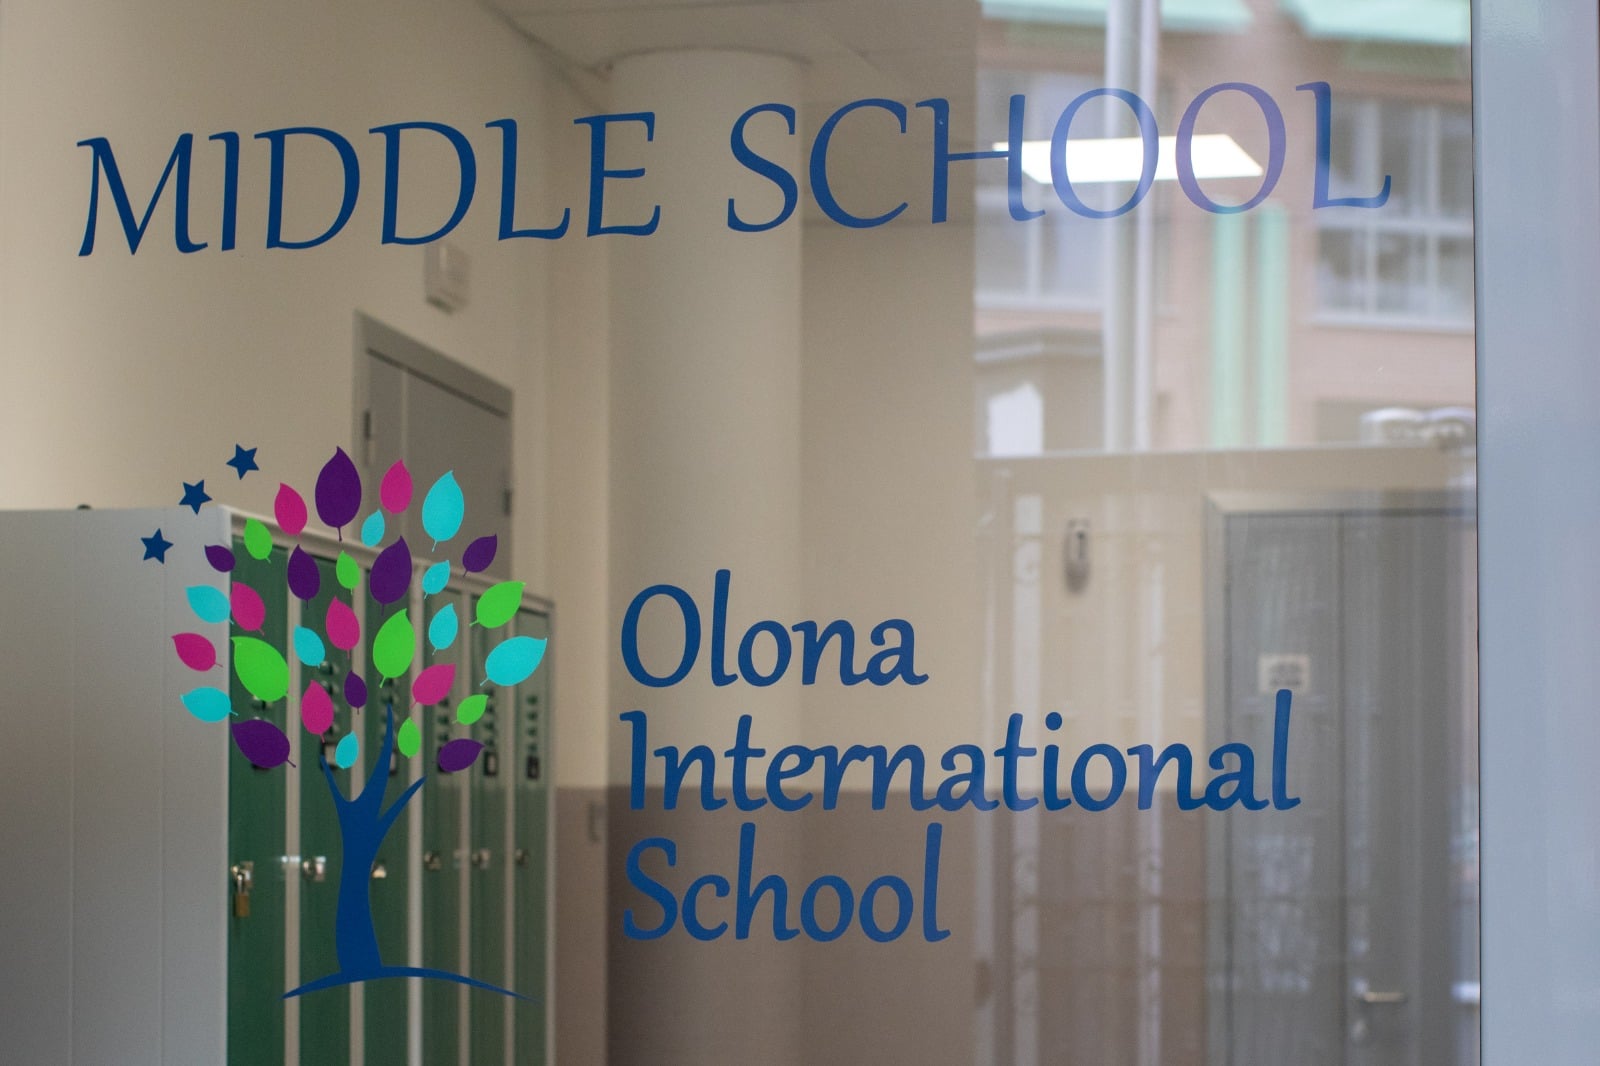 Olona International School: l’offerta formativa d’eccellenza in provincia di Varese!